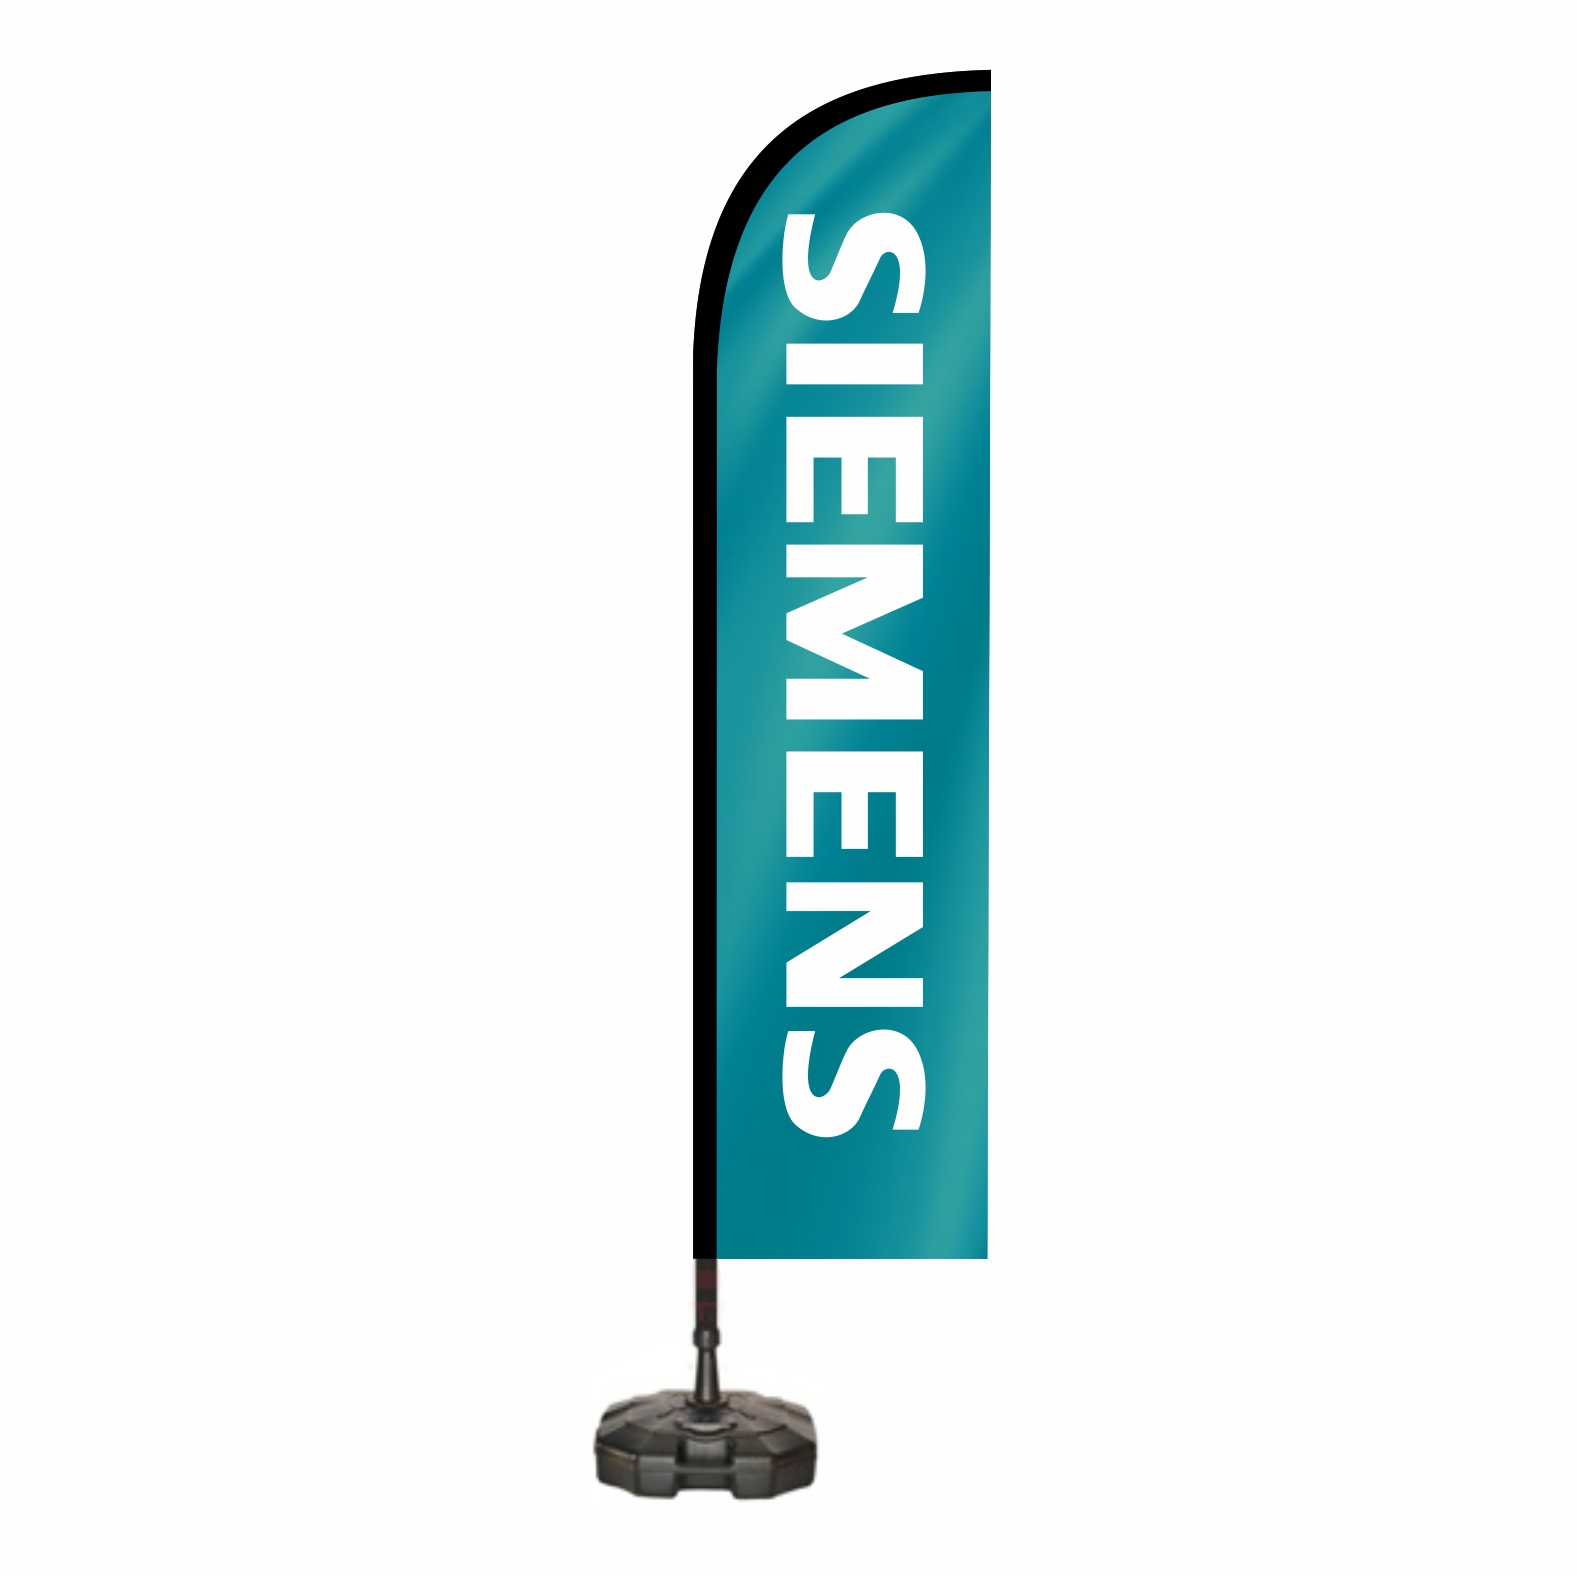 Siemens Yelken Bayraklar reticileri